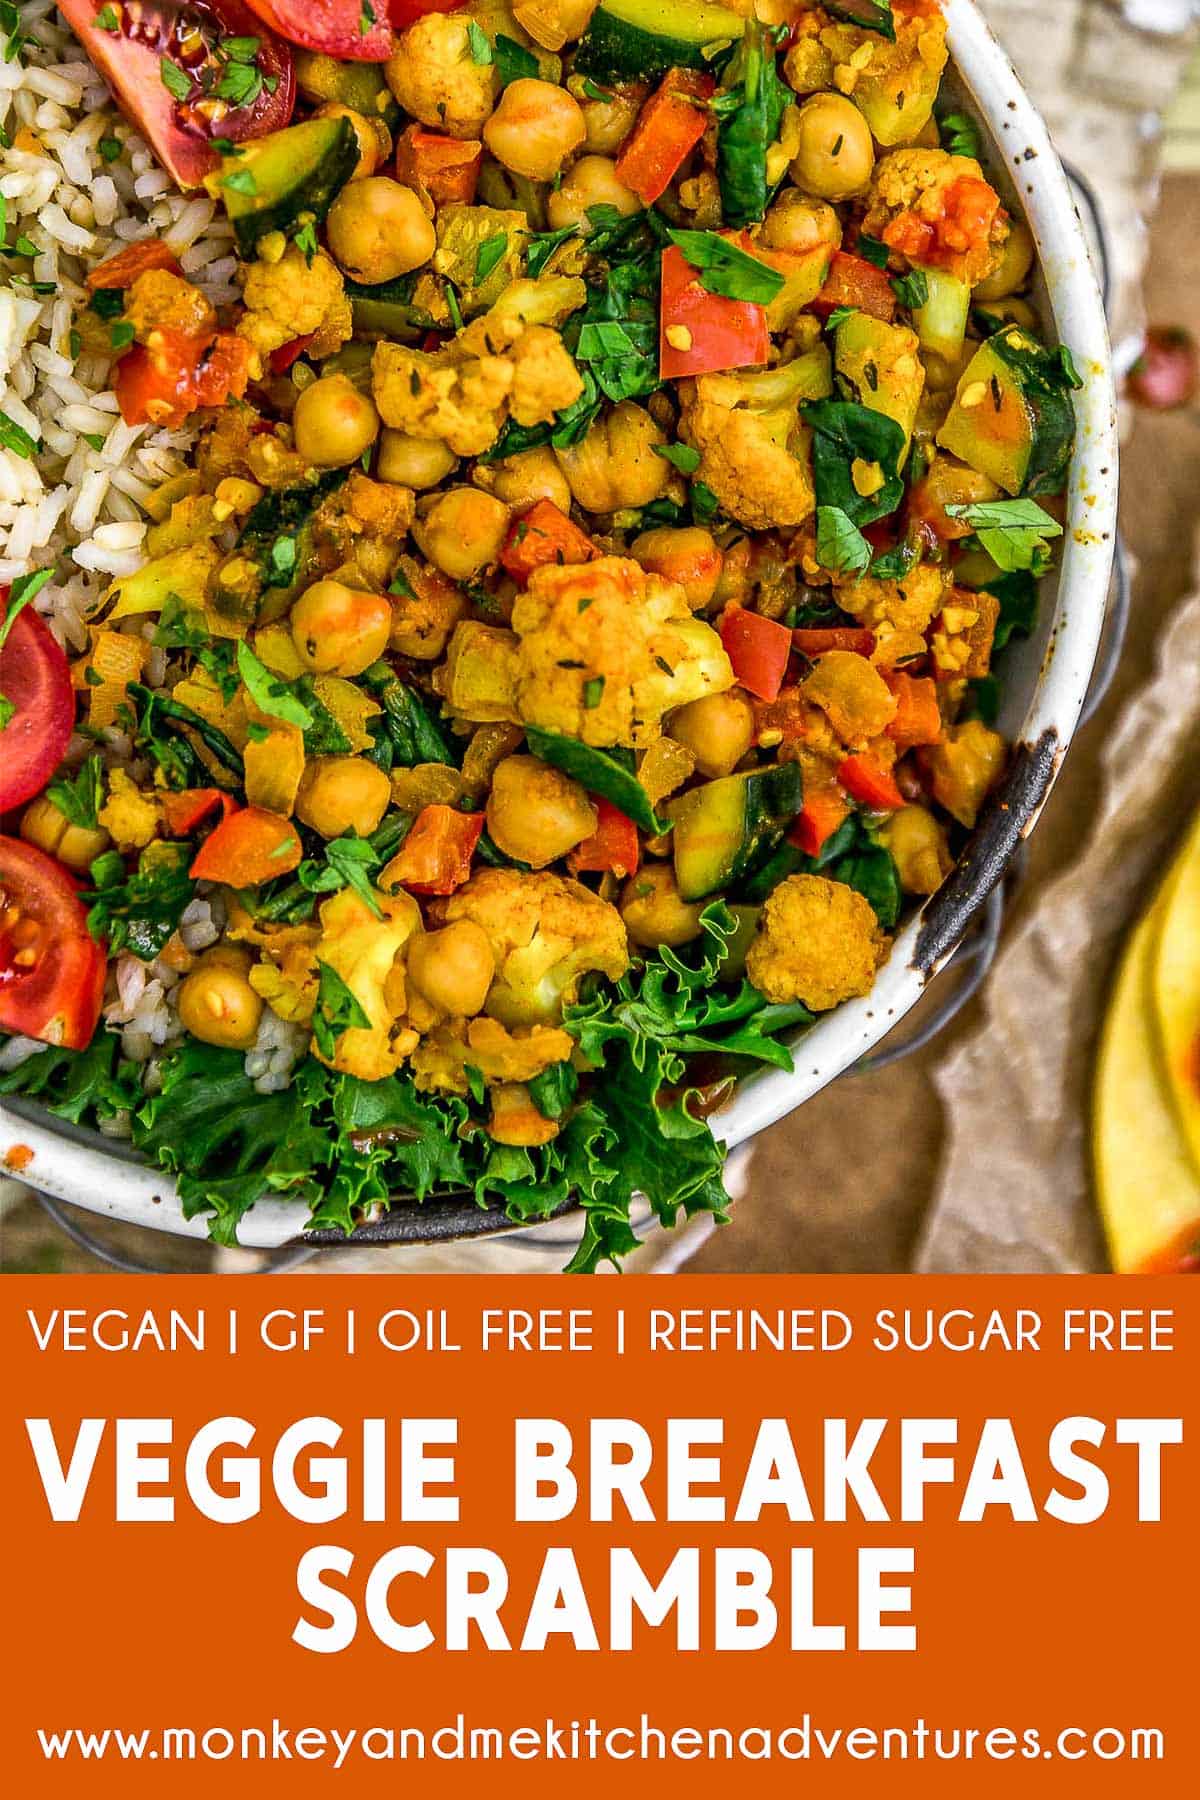 Veggie Breakfast Scramble with text description